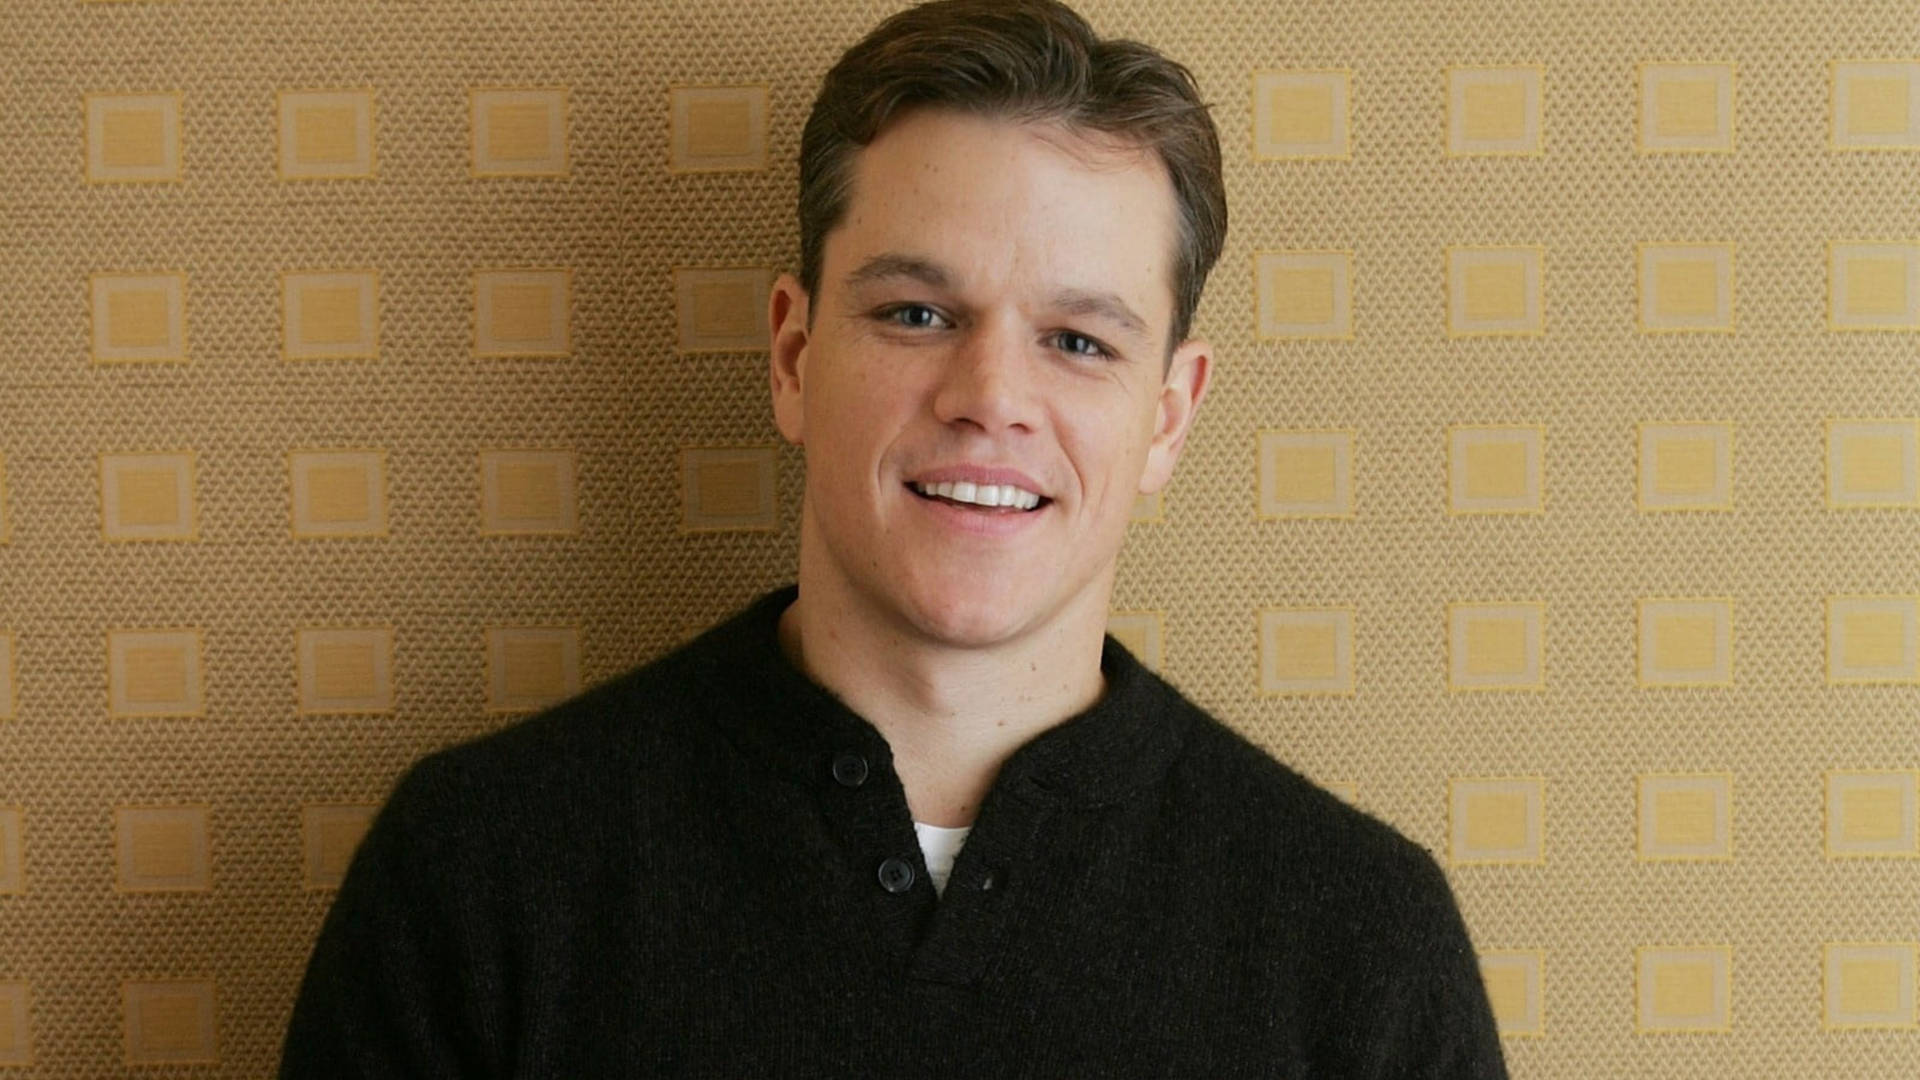 Matt Damon Mid-parted Hair Background